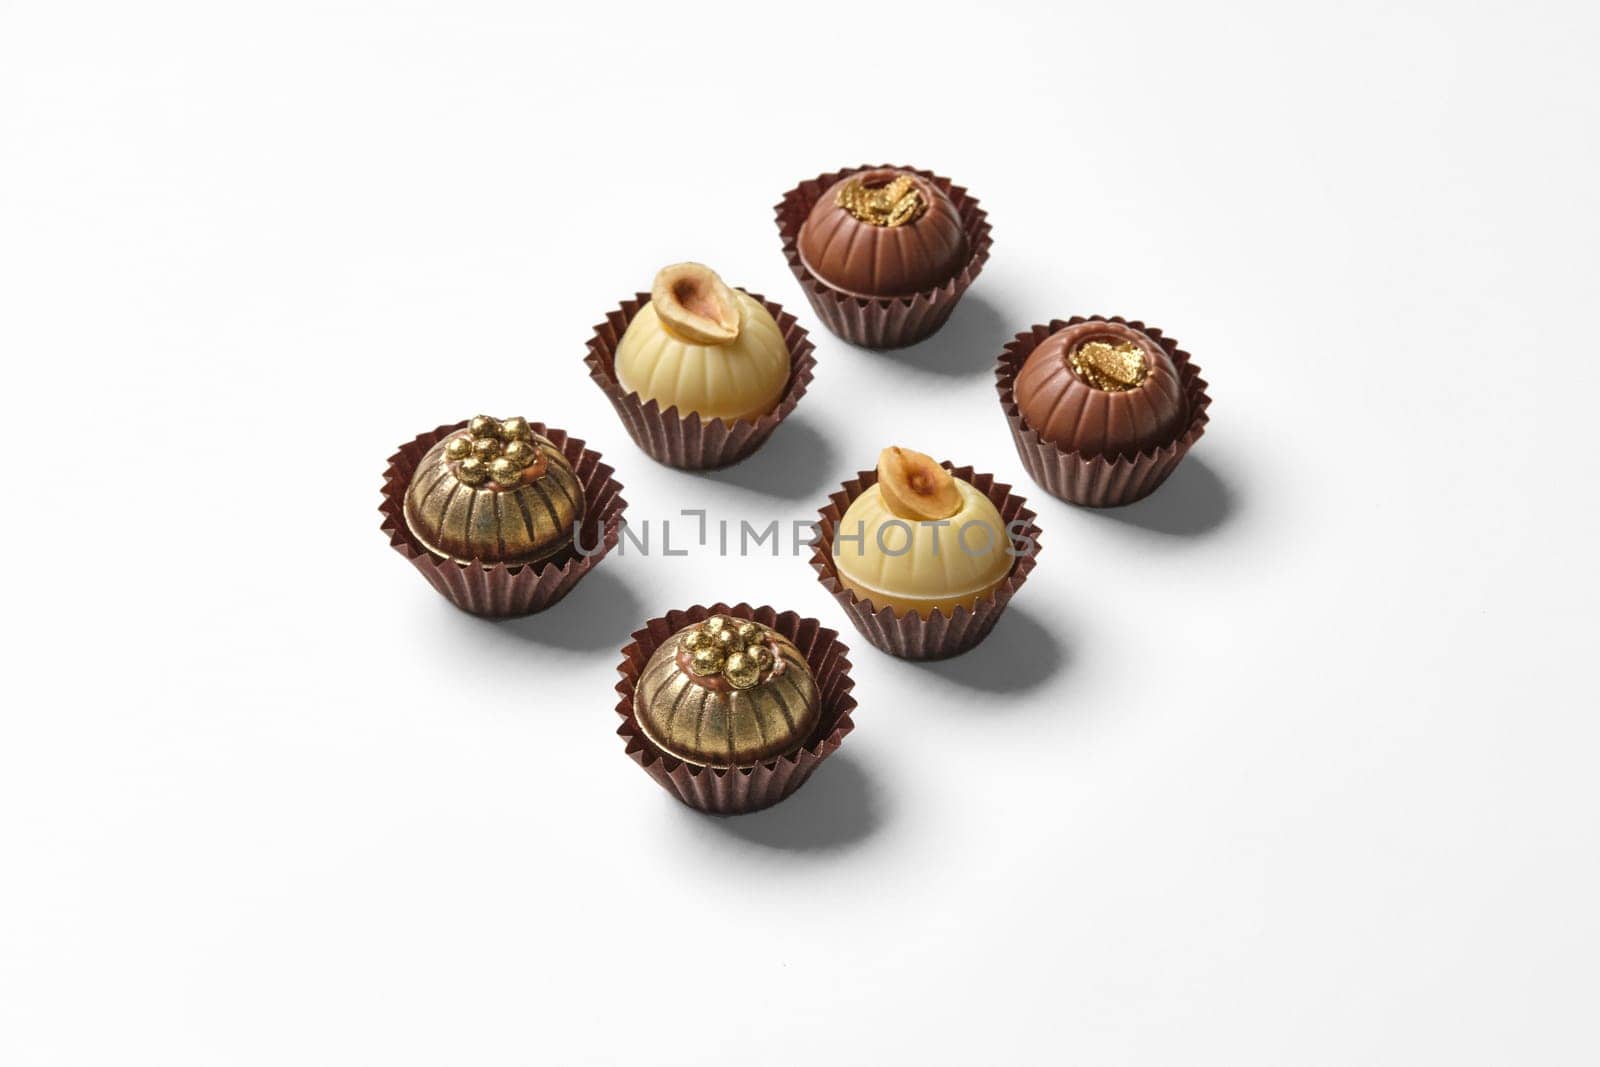 Artisan chocolates with hazelnuts, caramel and golden pearls by nazarovsergey